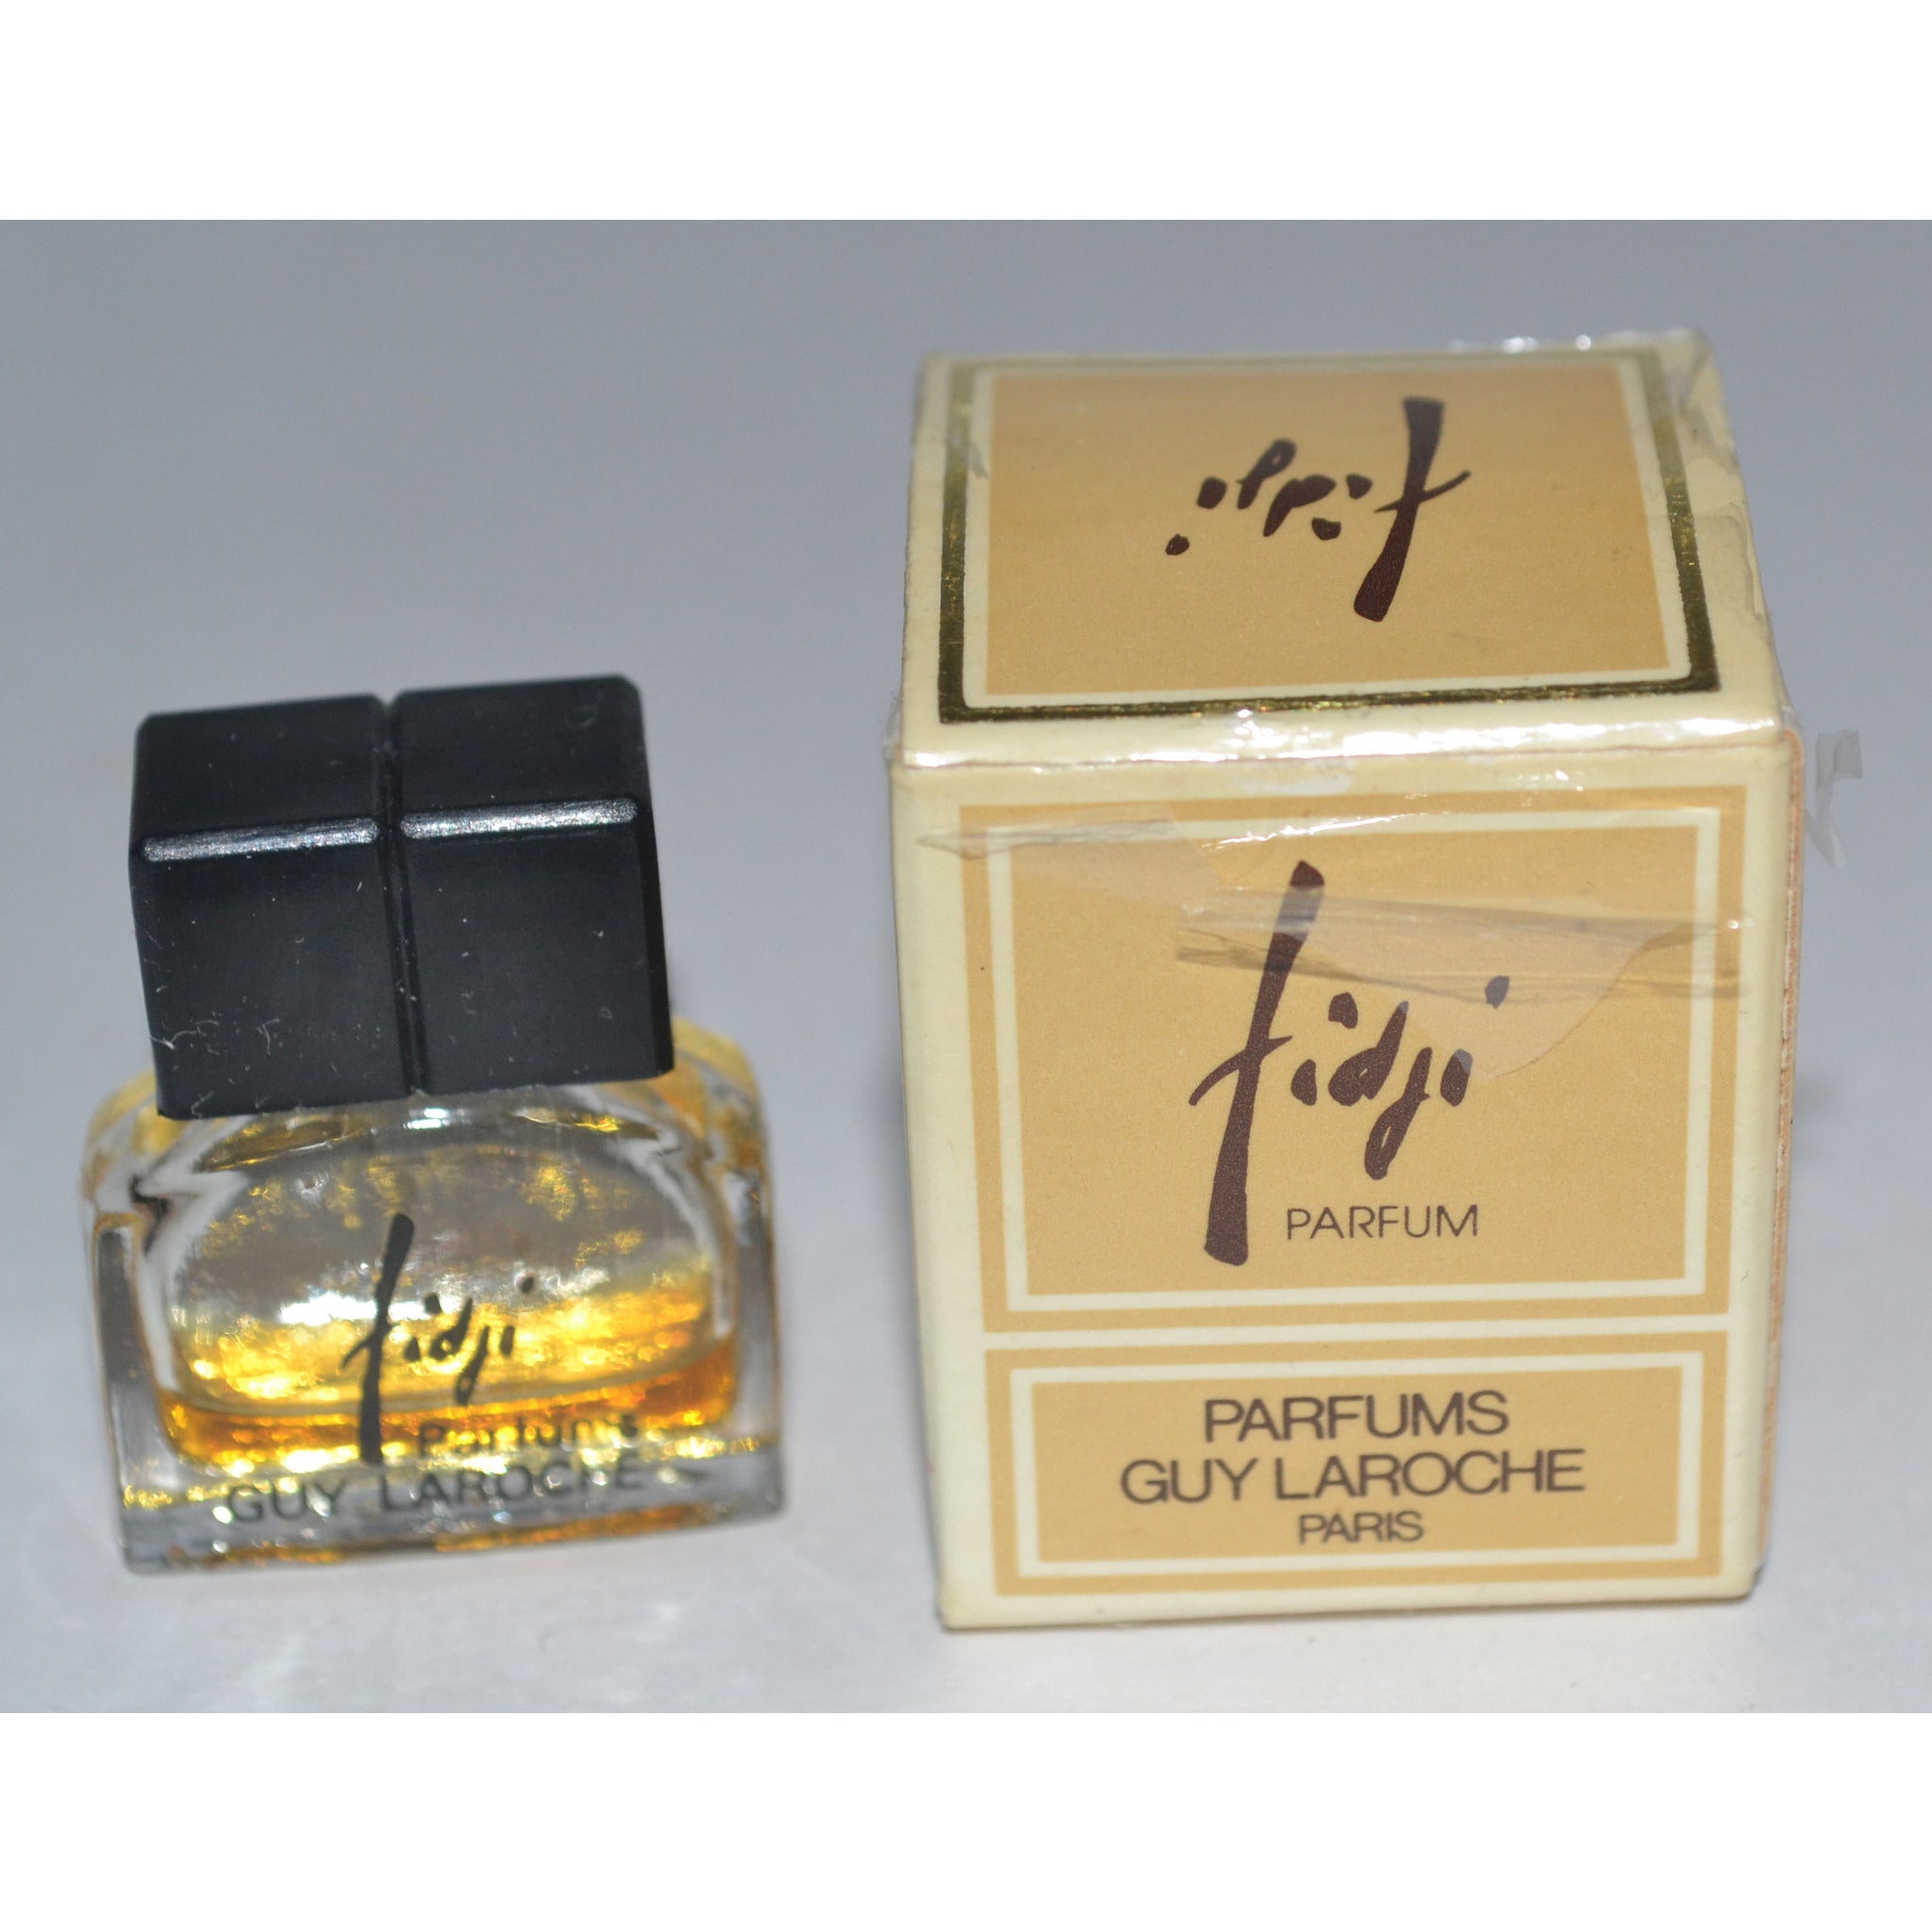 Vintage Fidji Parfum Mini By Guy Laroche – Quirky Finds